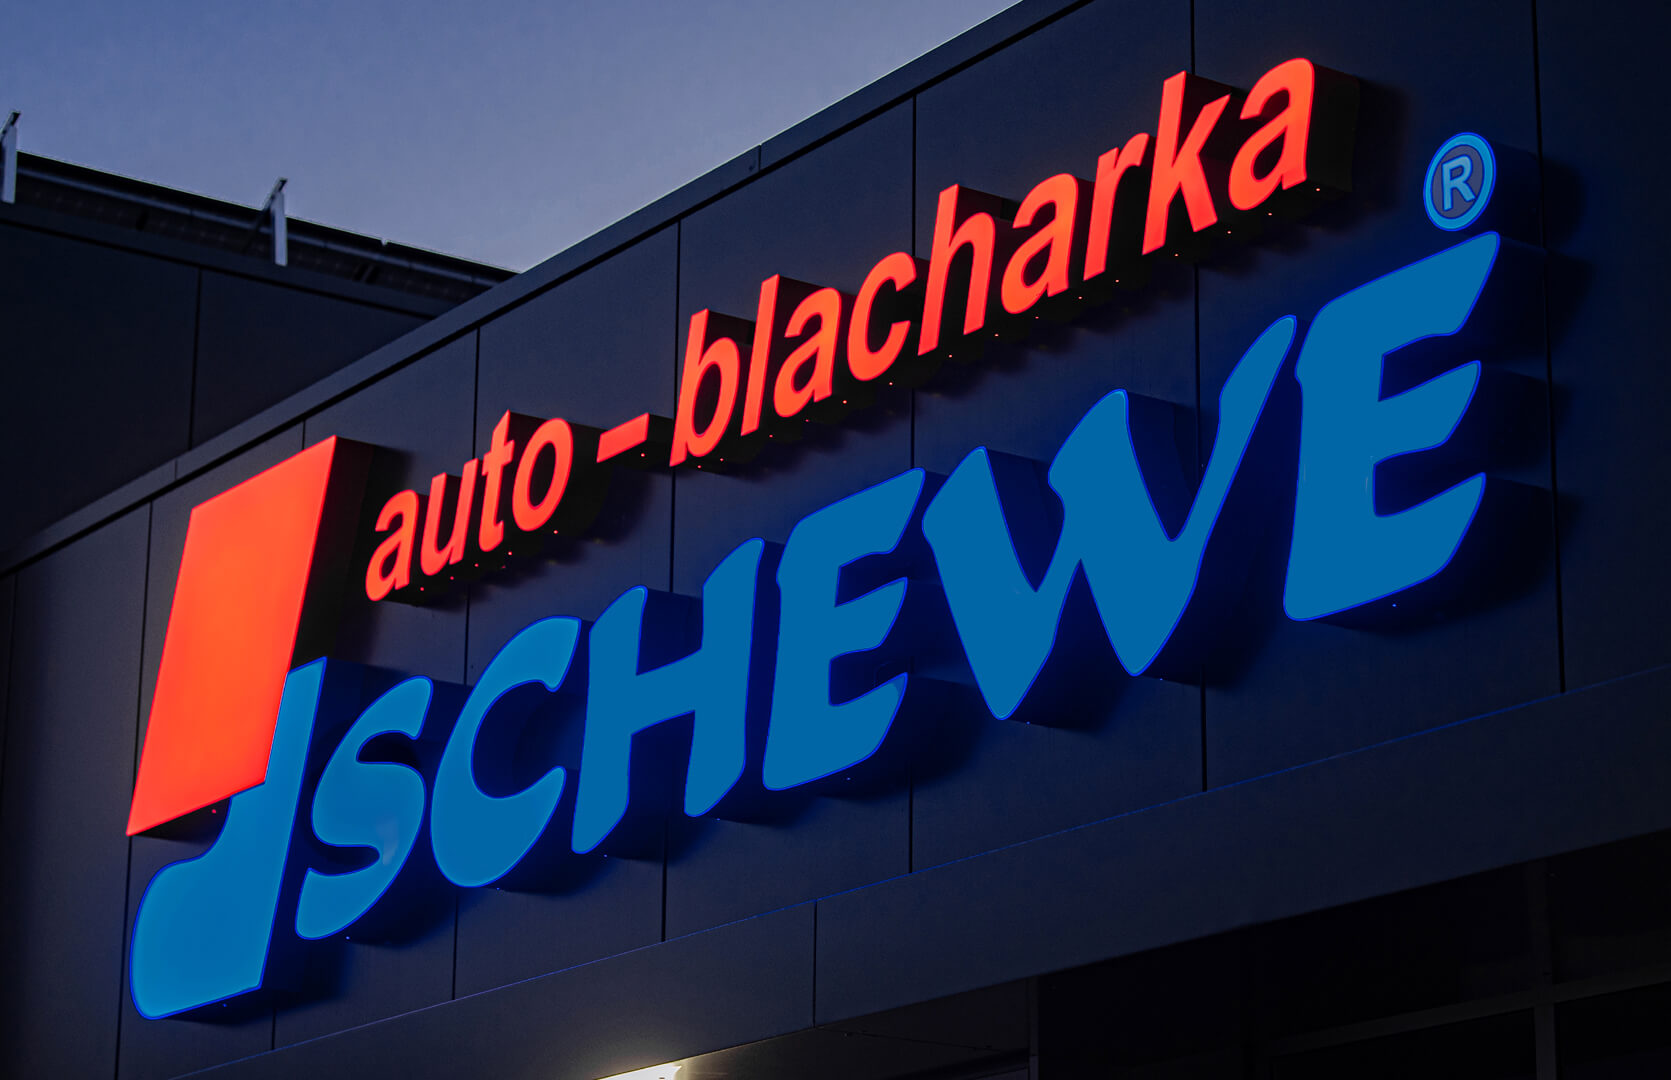 Auto blacharka Schewe - Auto body, LED illuminated landscape letters.